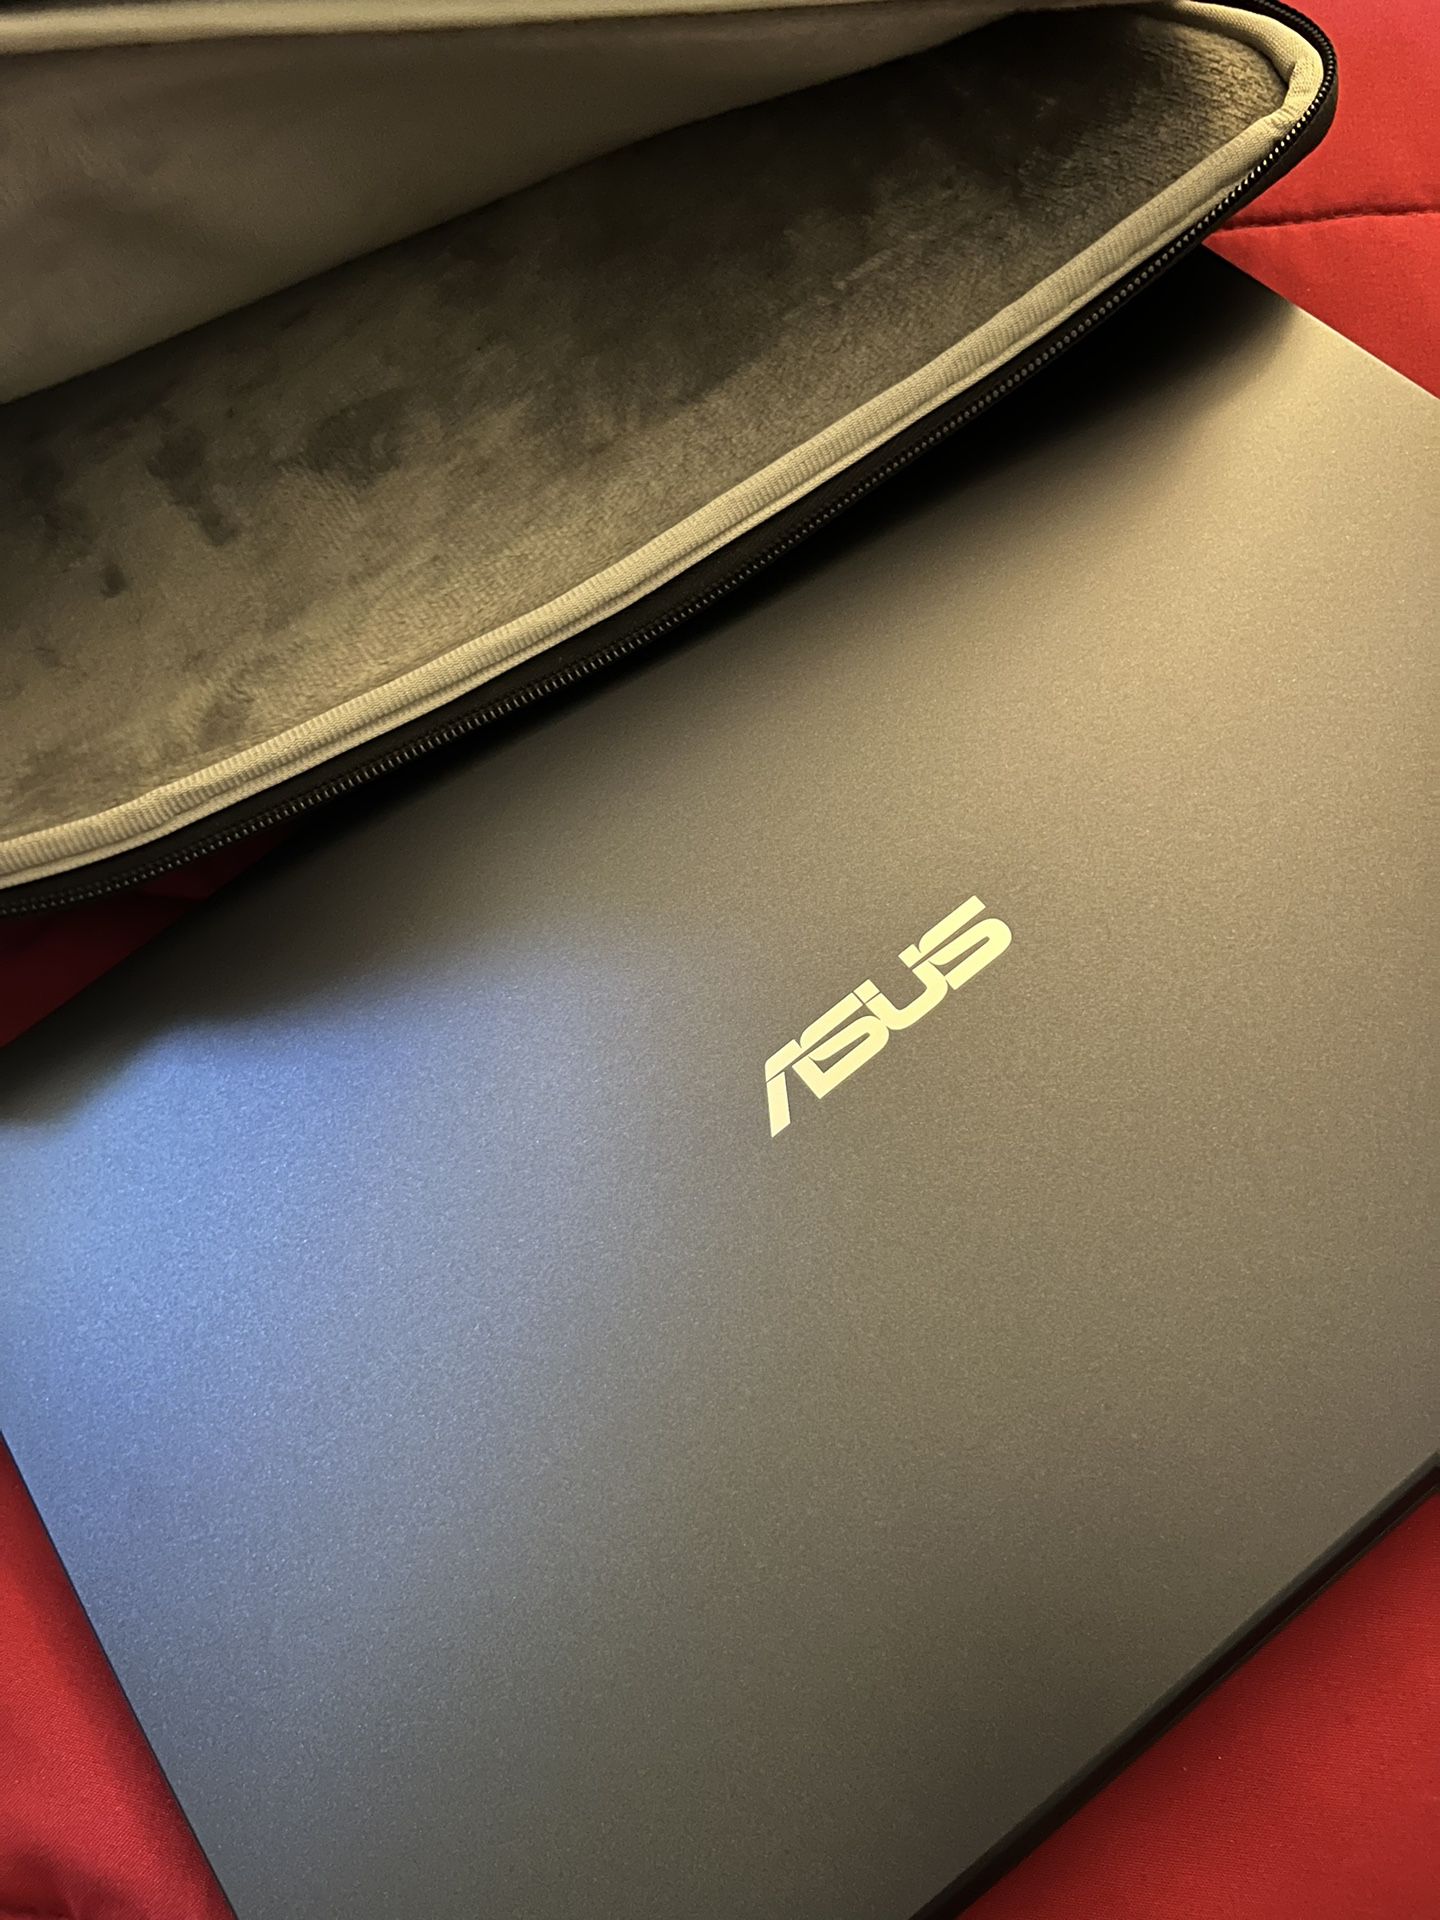 Asus Laptop Brand New 